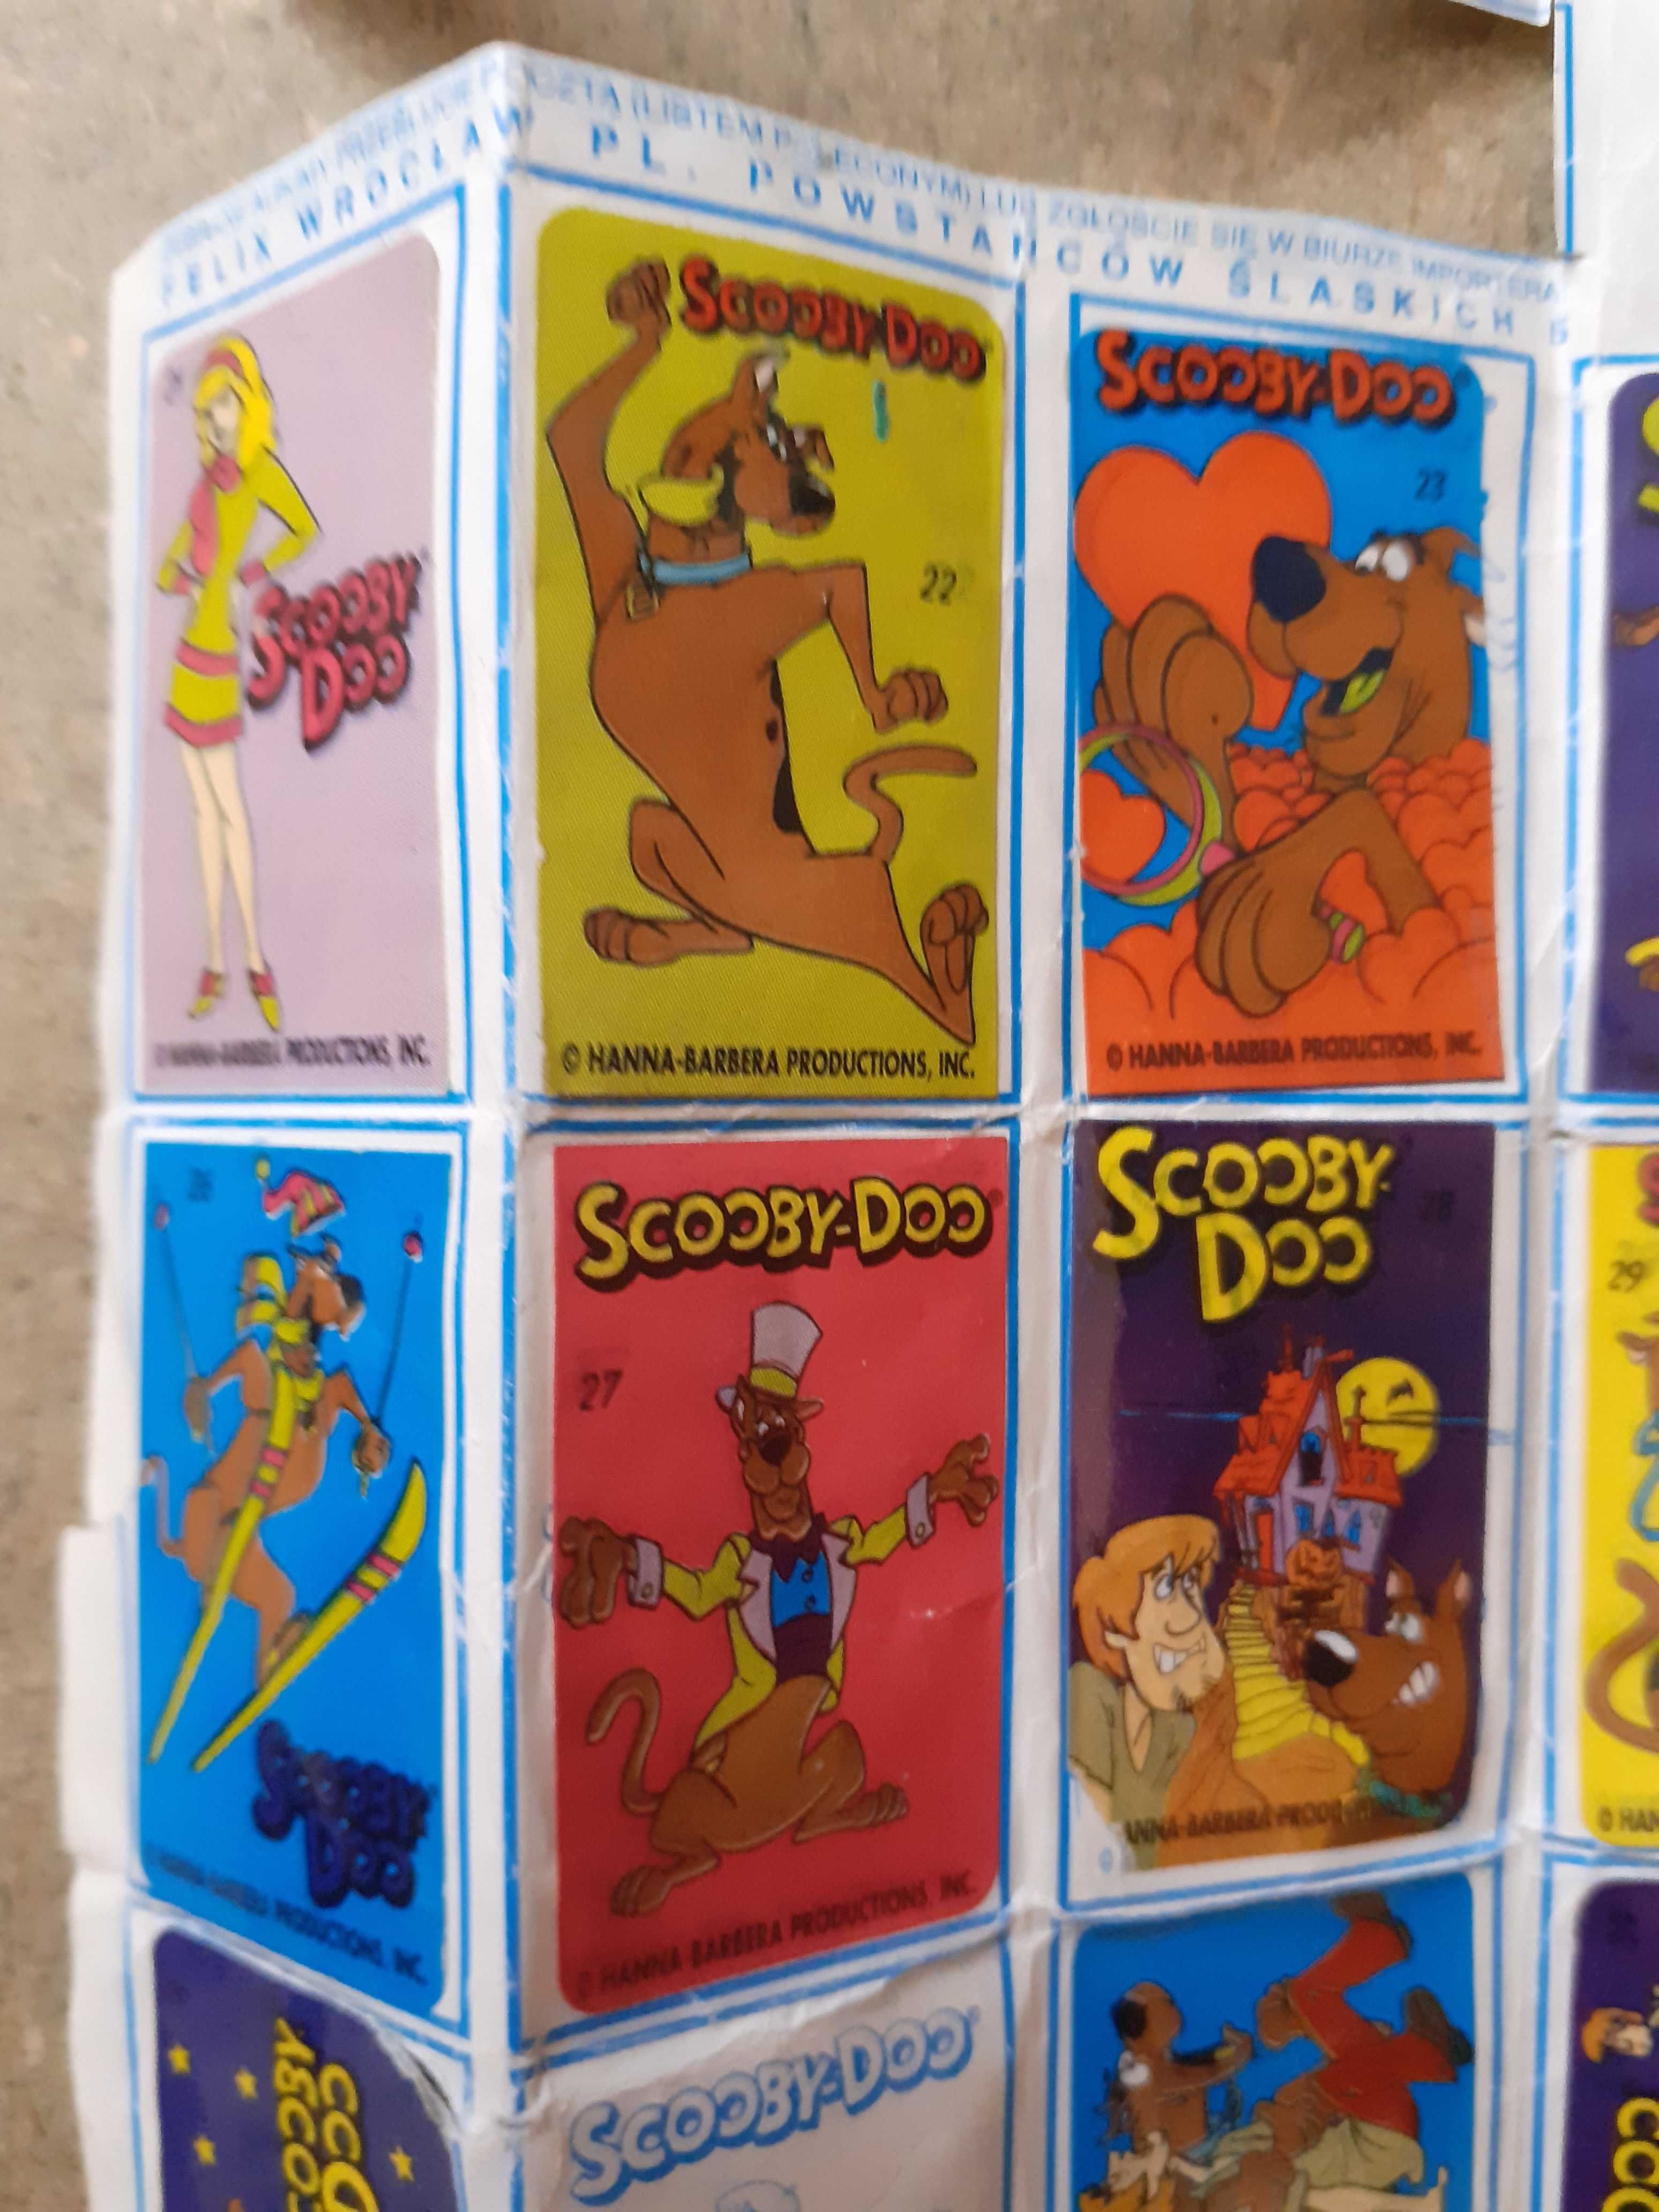 Scooby-Doo album naklejki kolekcjonerskie unikat '90s vintage retro